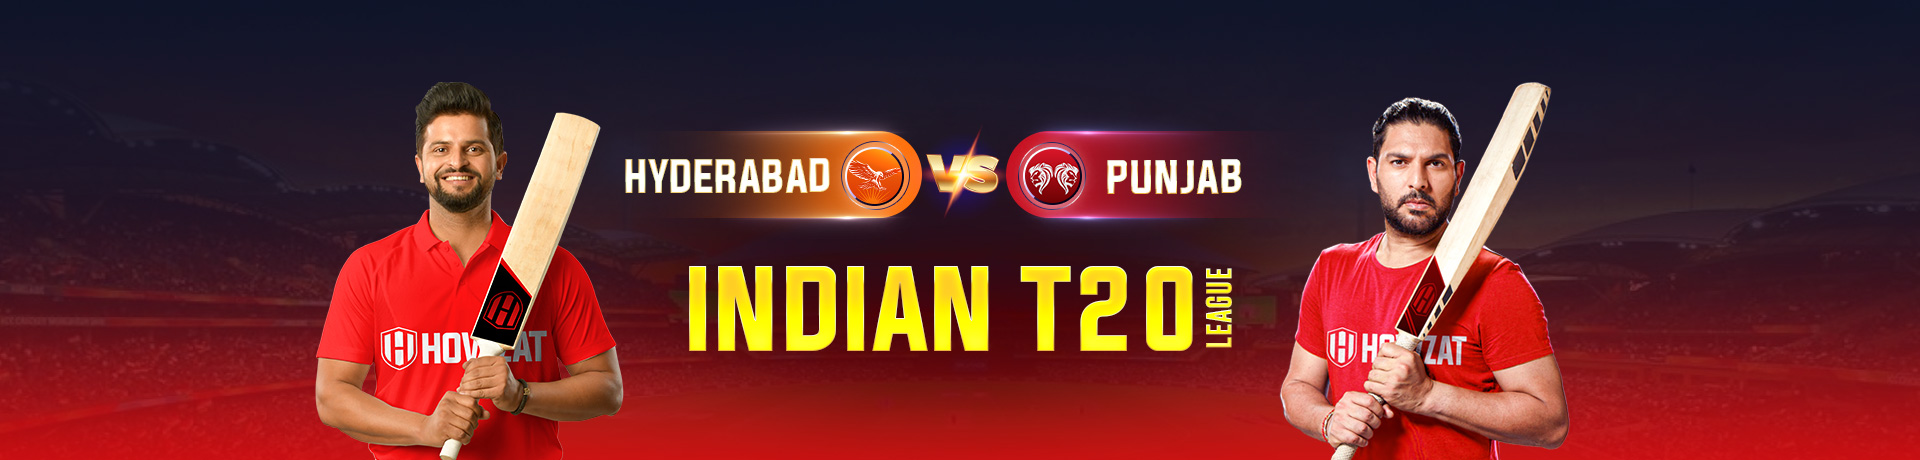 Hyderabad vs Punjab Indian T20 League